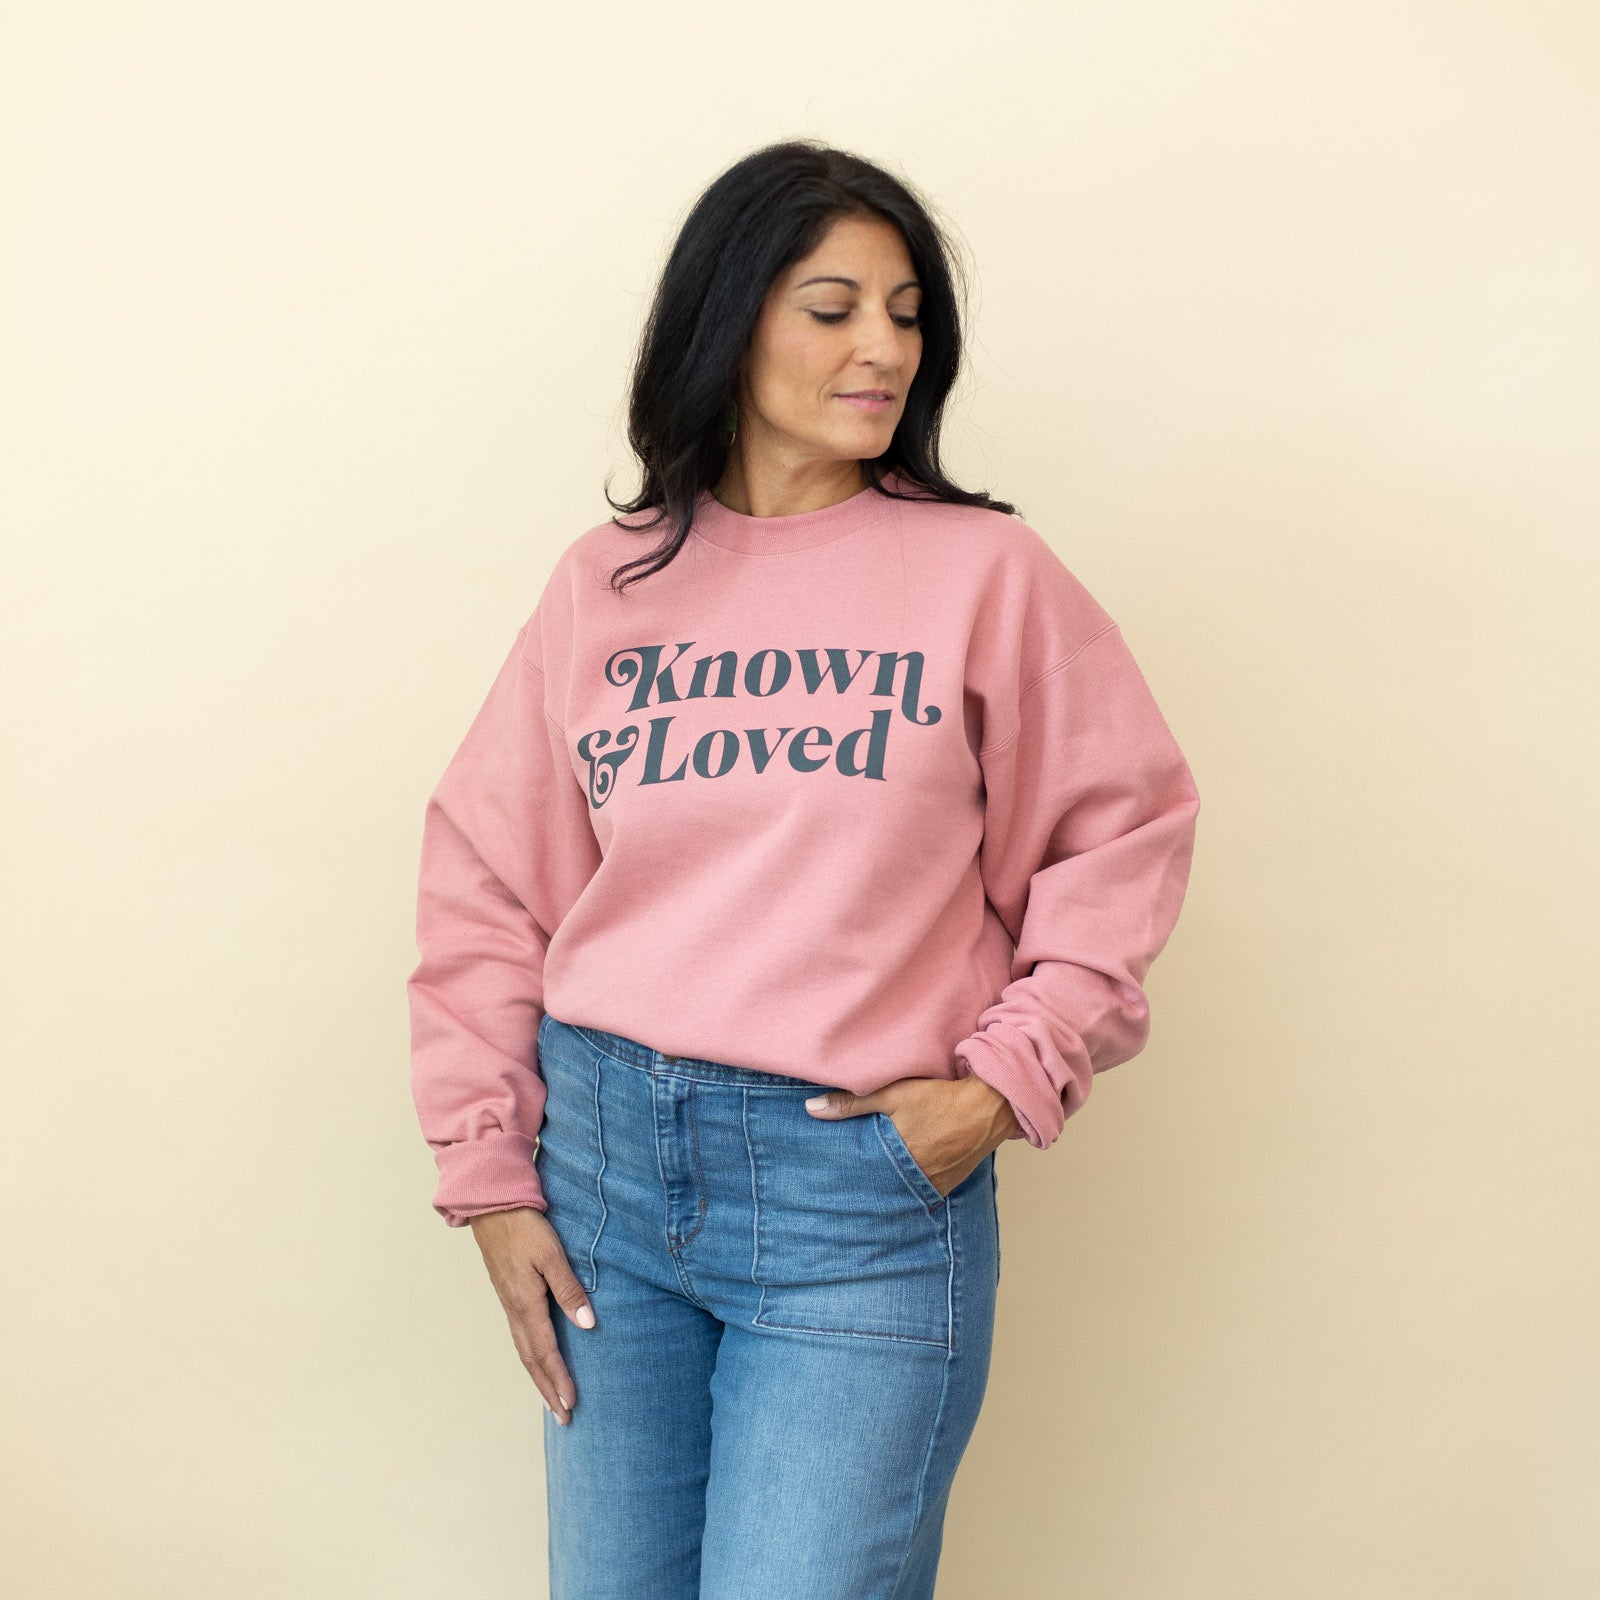 "Known & Loved" Sweatshirt